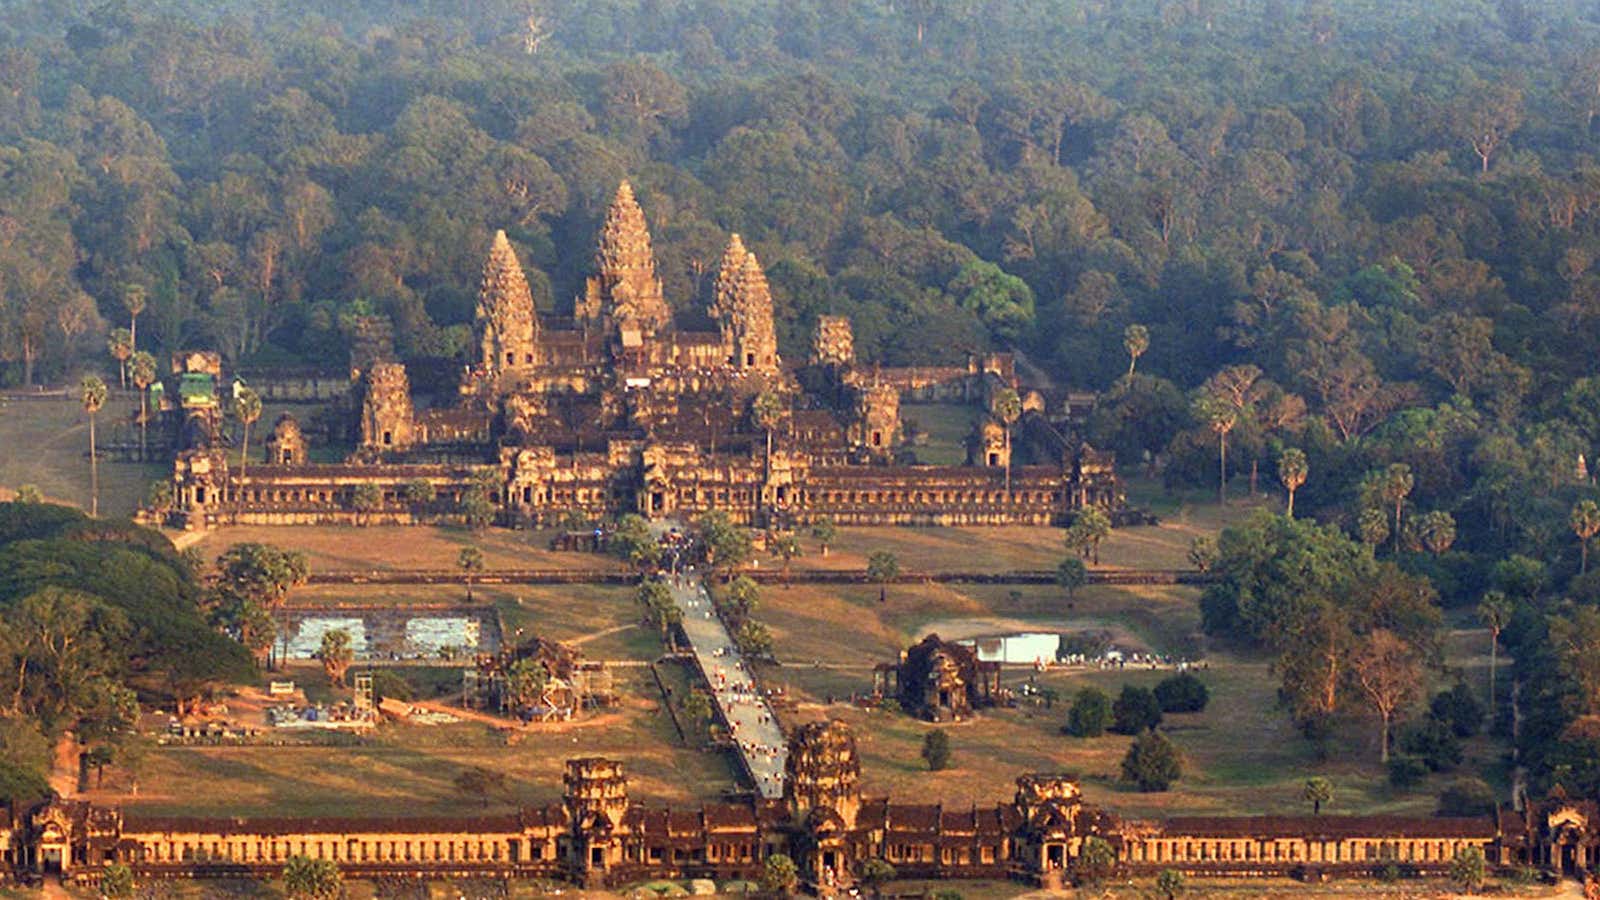 Humans found Angkor Wat—but LiDAR found other Khmer ruins.